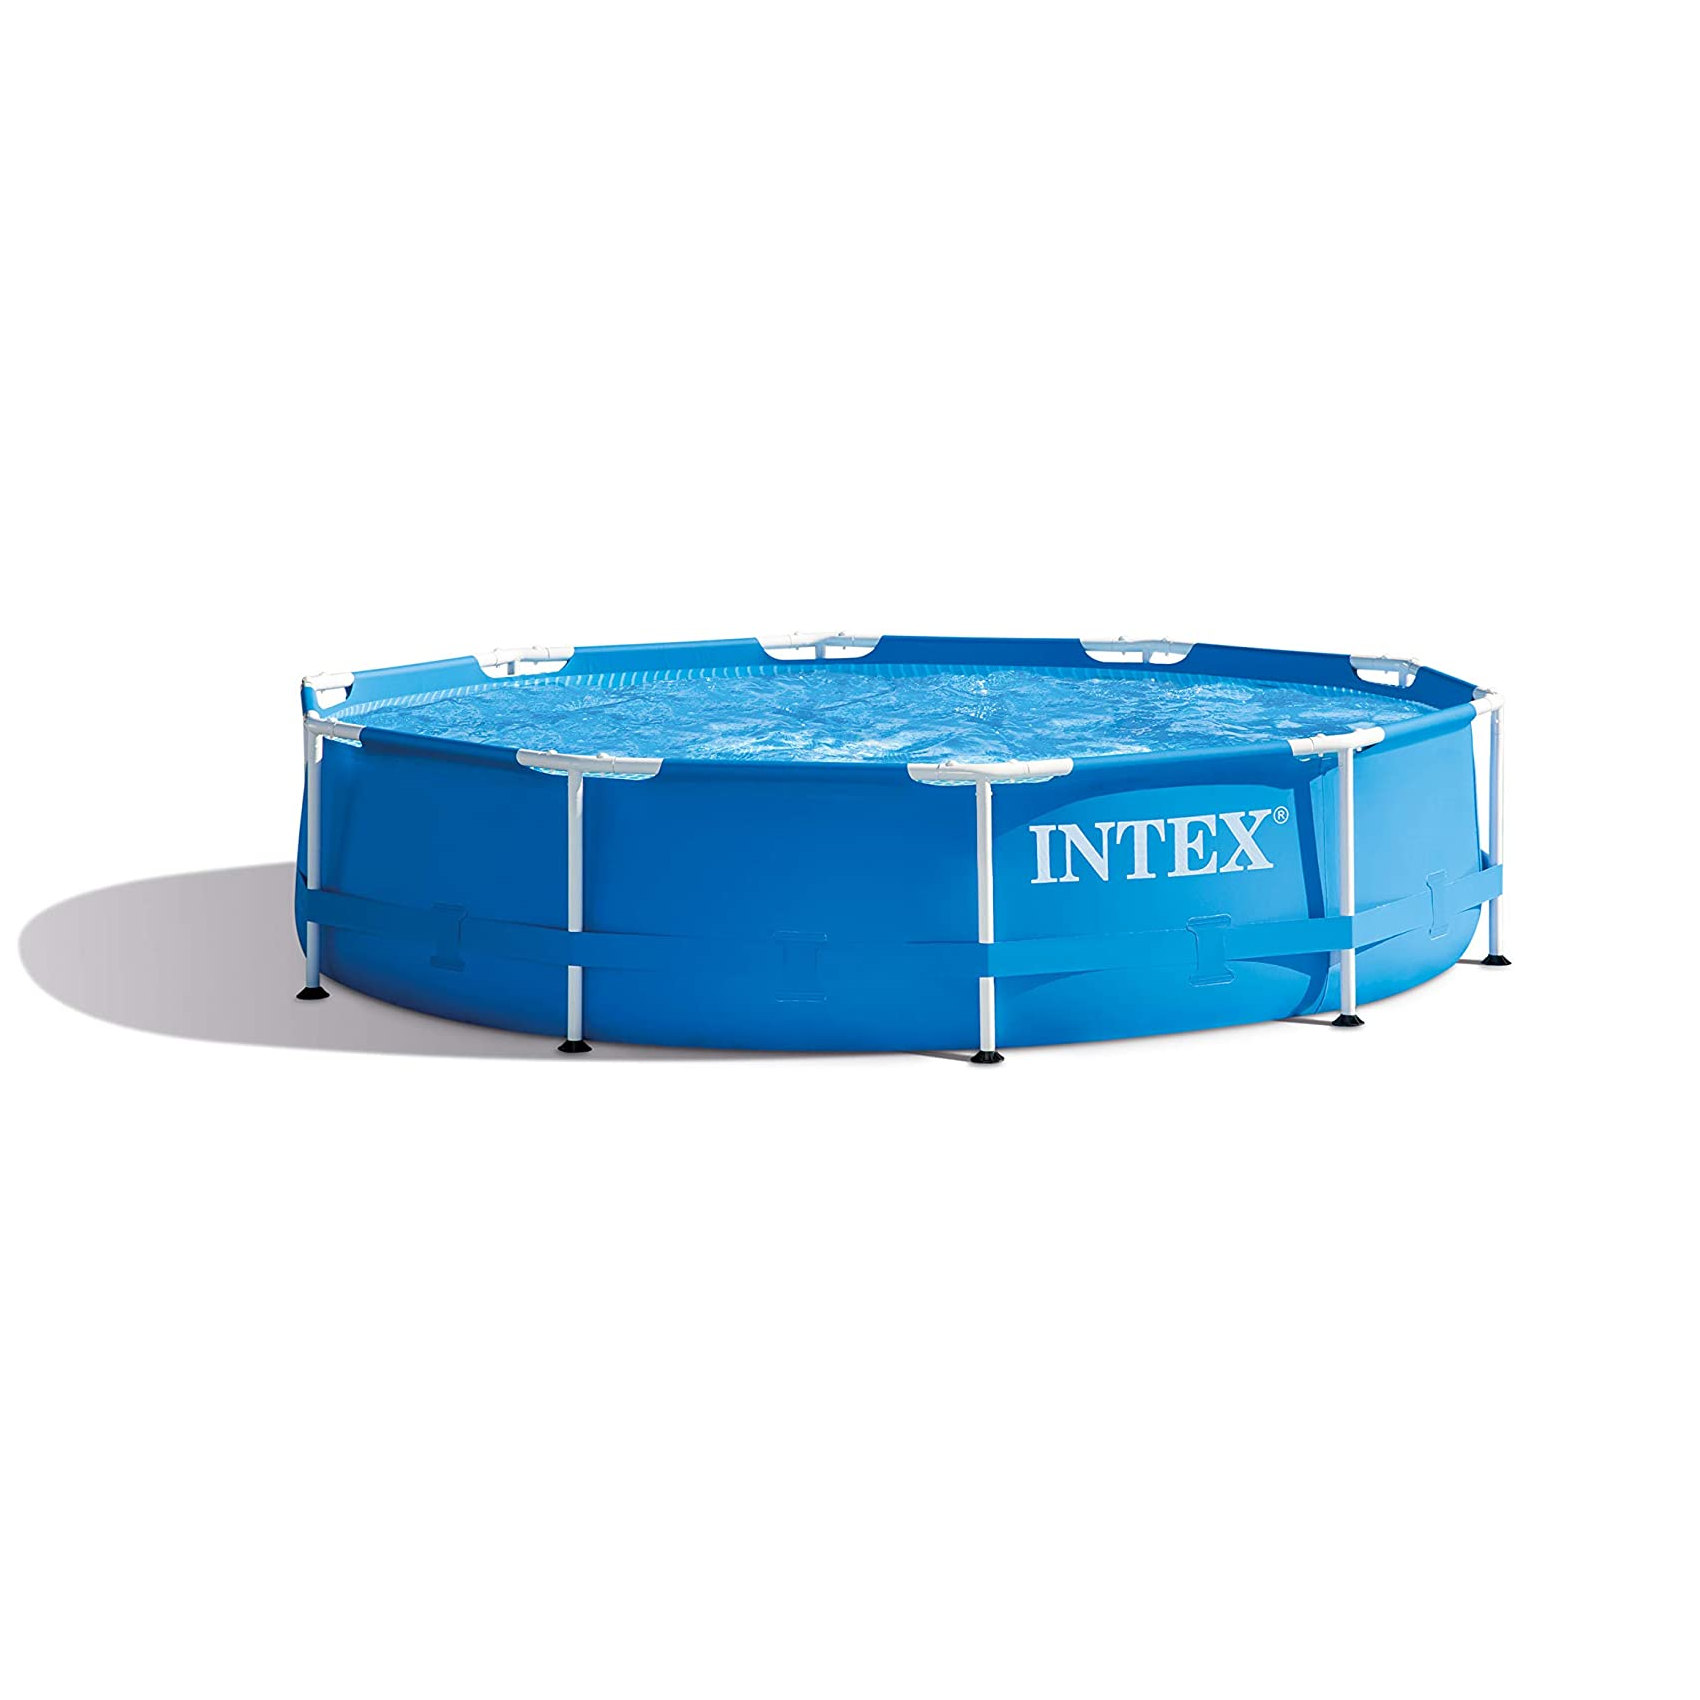 INTEX MetallFrame Pool 28202GN blau Solarabdeckplane Swimmingpool, mit